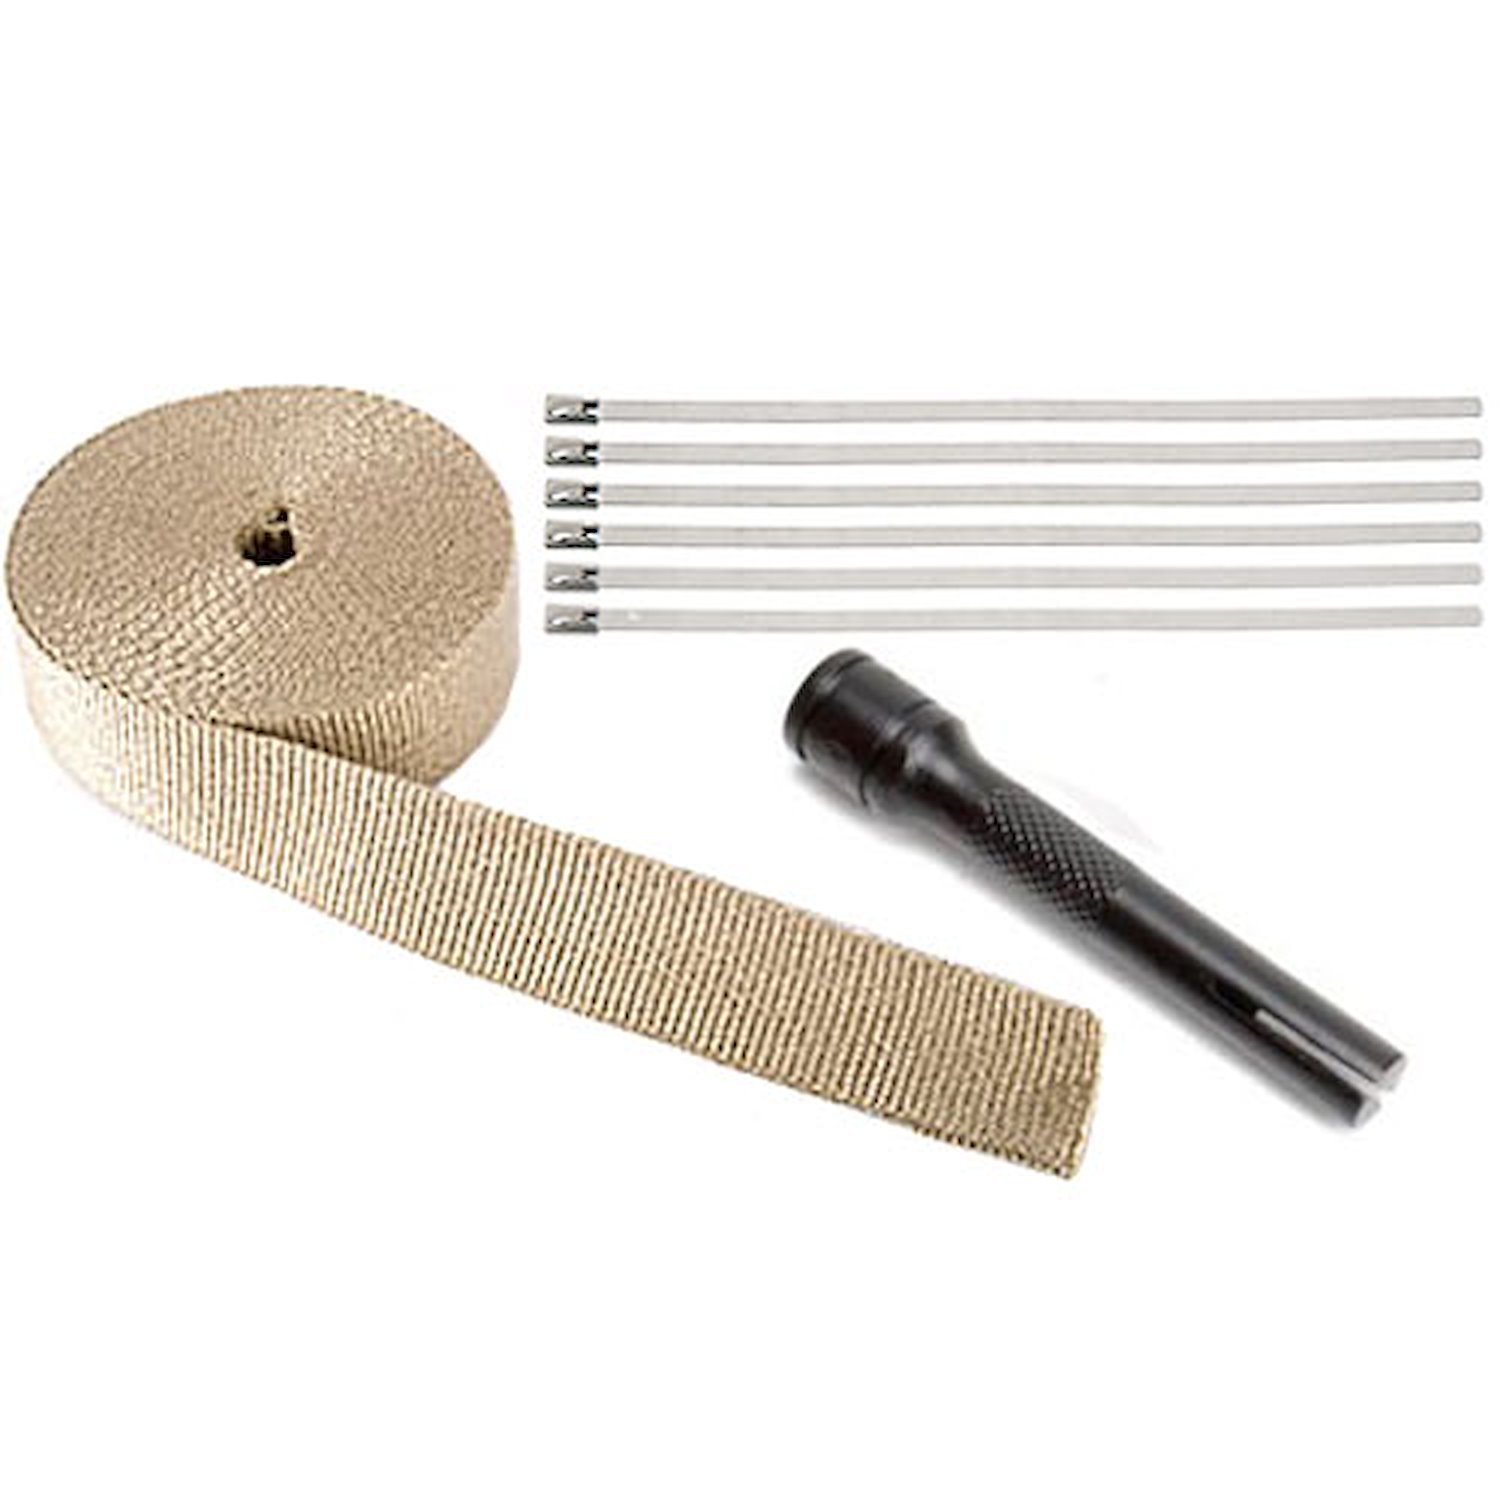 Locking Tie Tool Kit w/Tan Wrap Includes: 2" x 50" Tan Wrap